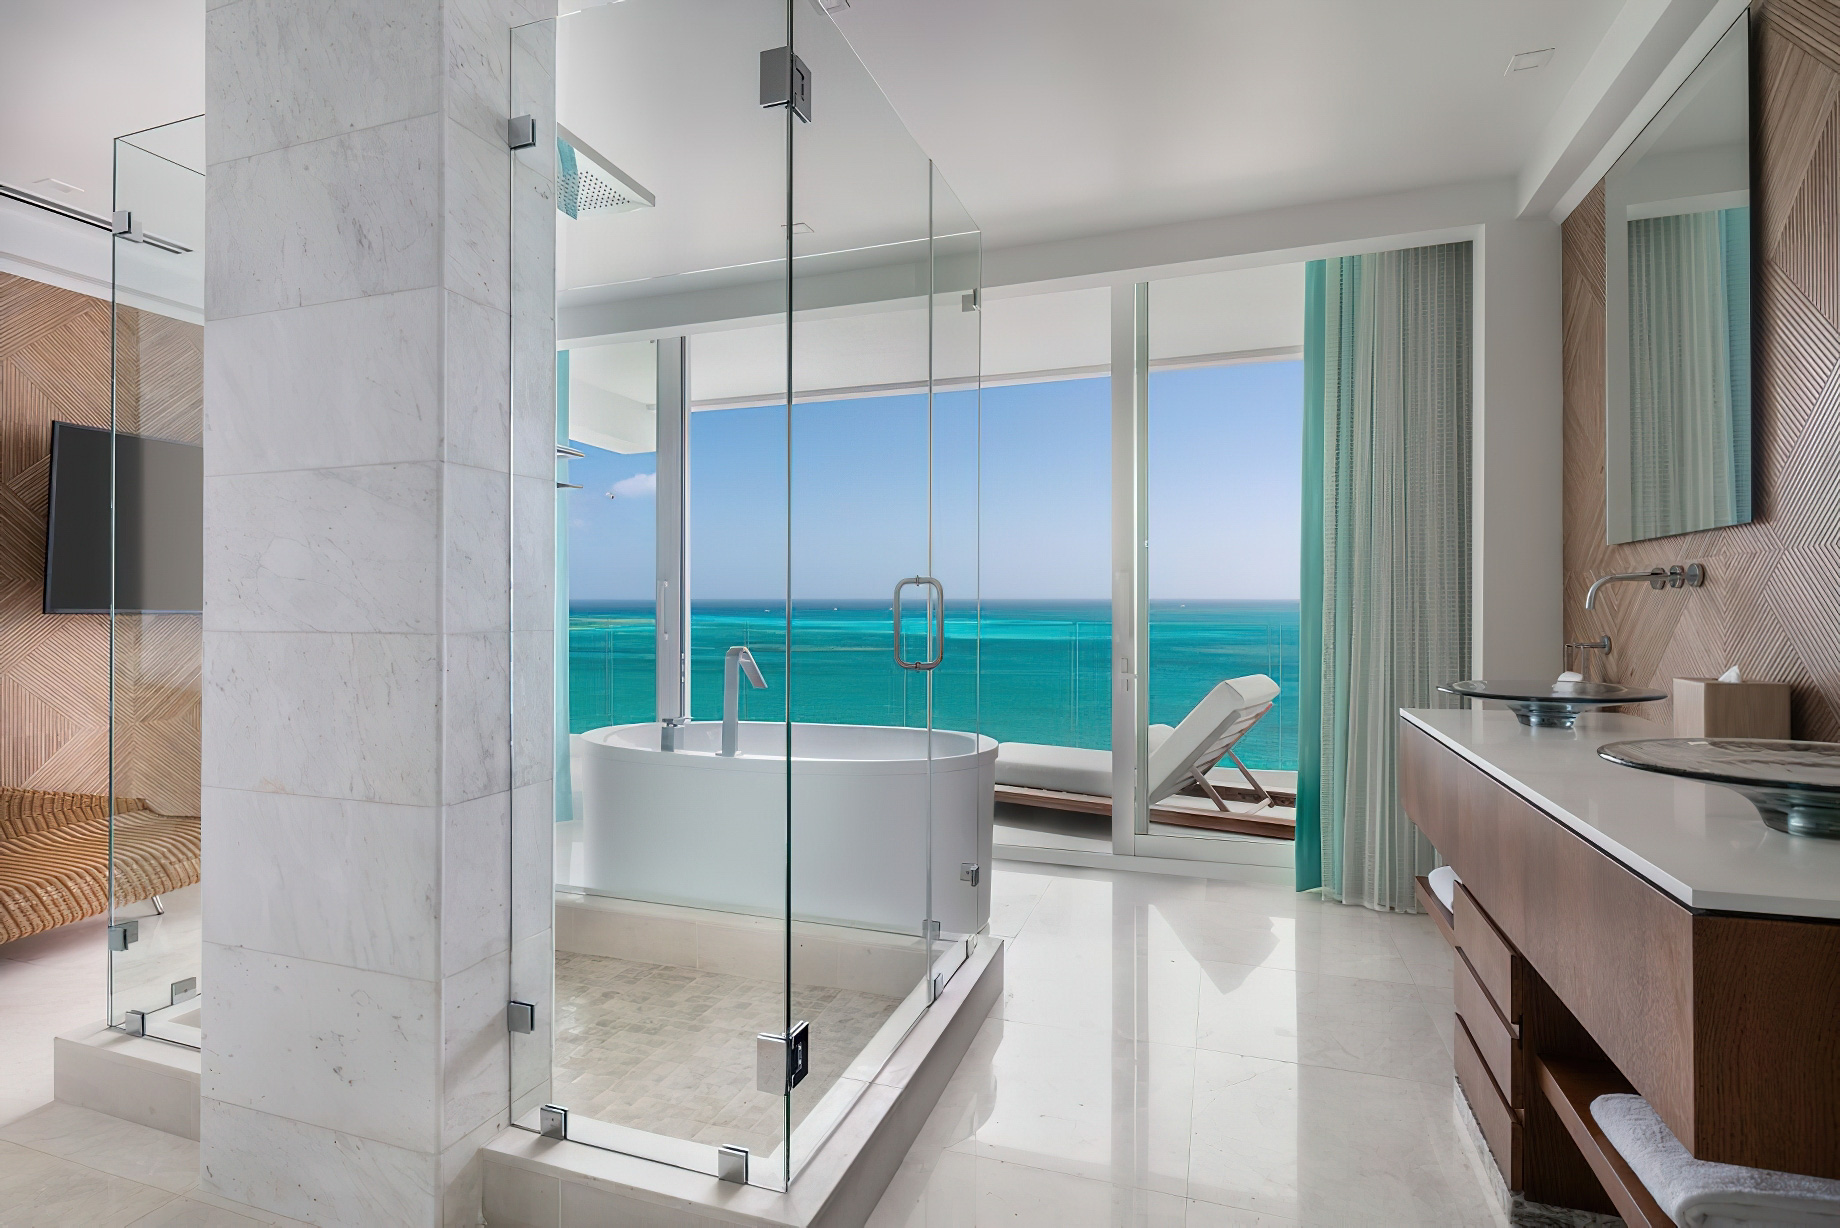 The Ritz-Carlton, Turks & Caicos Resort – Providenciales, Turks and Caicos Islands – Ritz-Carlton Suite Bathroom